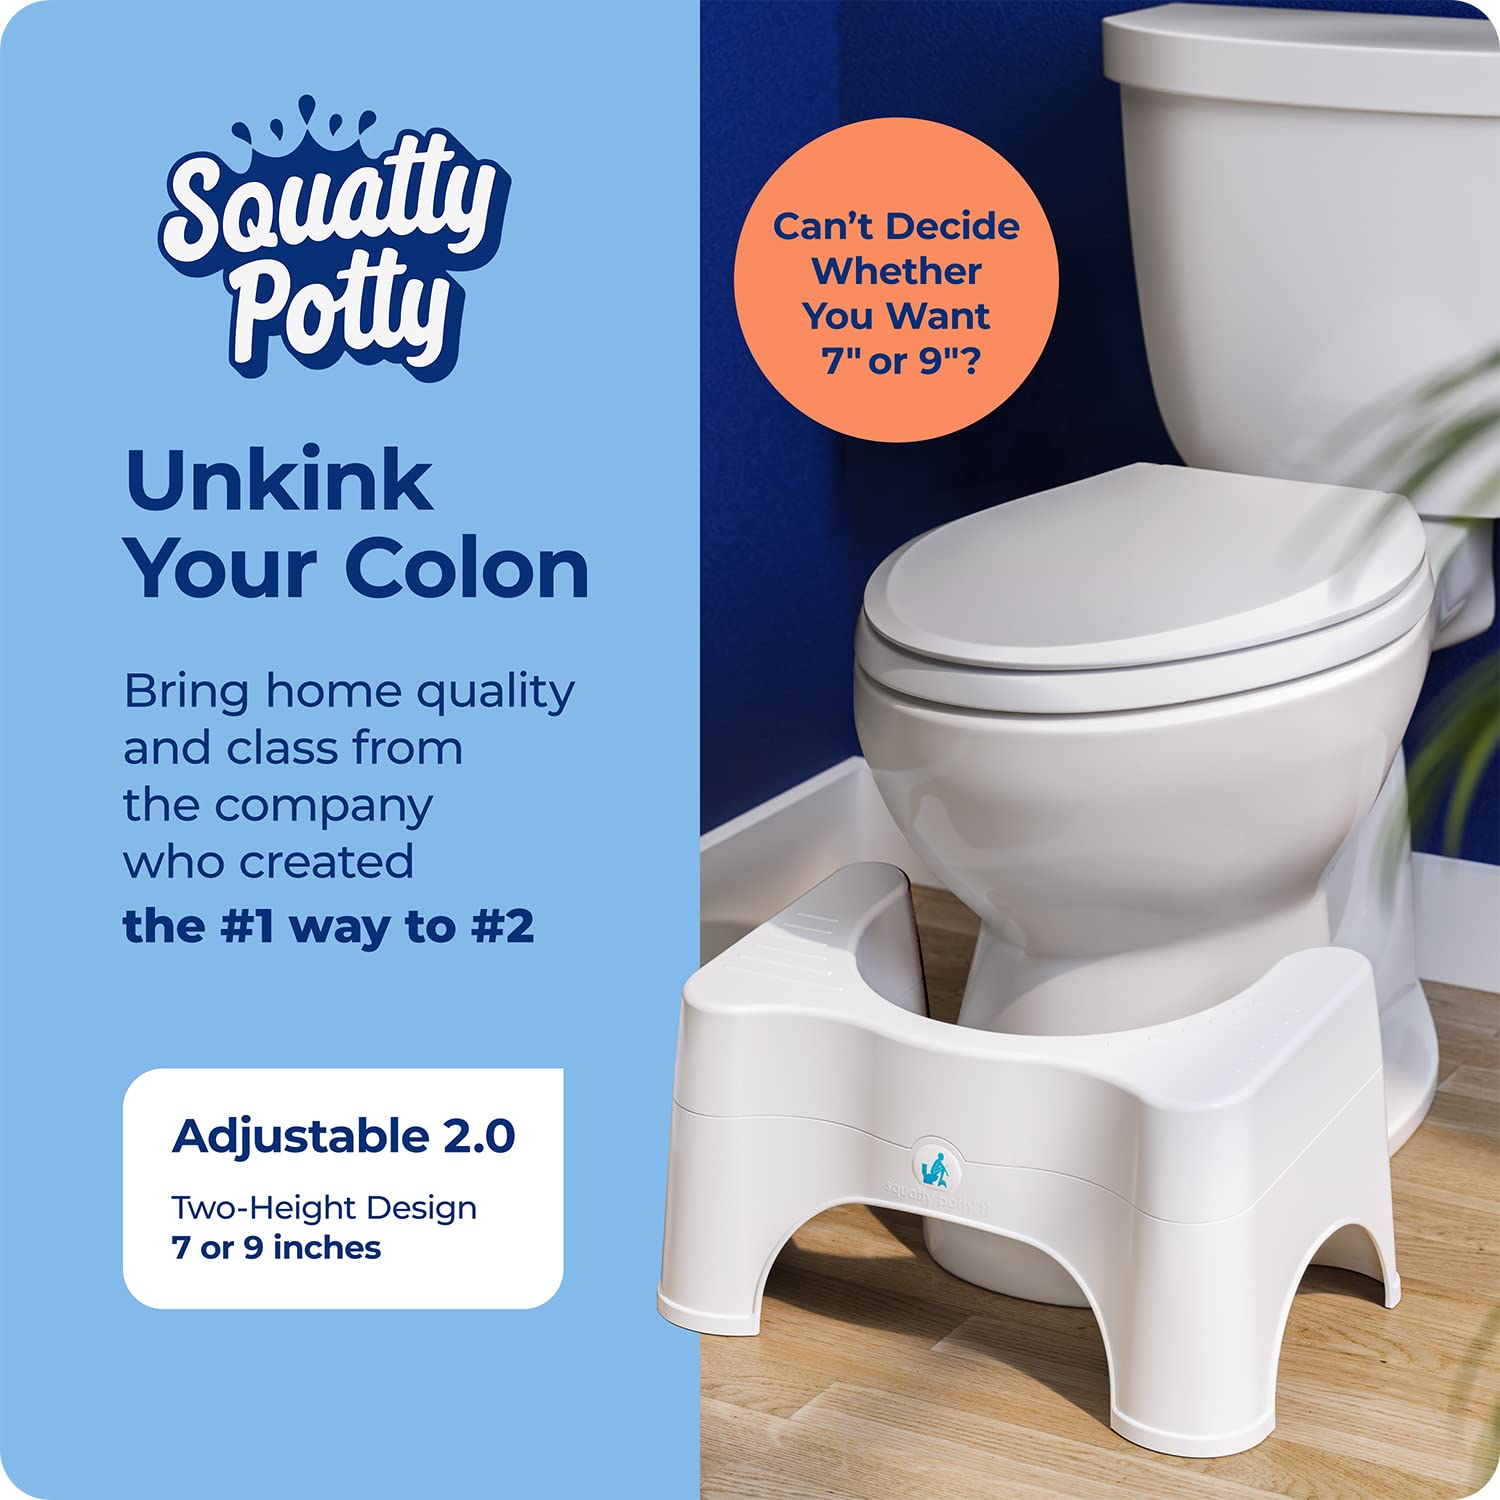 Squatty Potty The Original Bathroom Toilet Stool - Adjustable 2.0, Convertible to 7